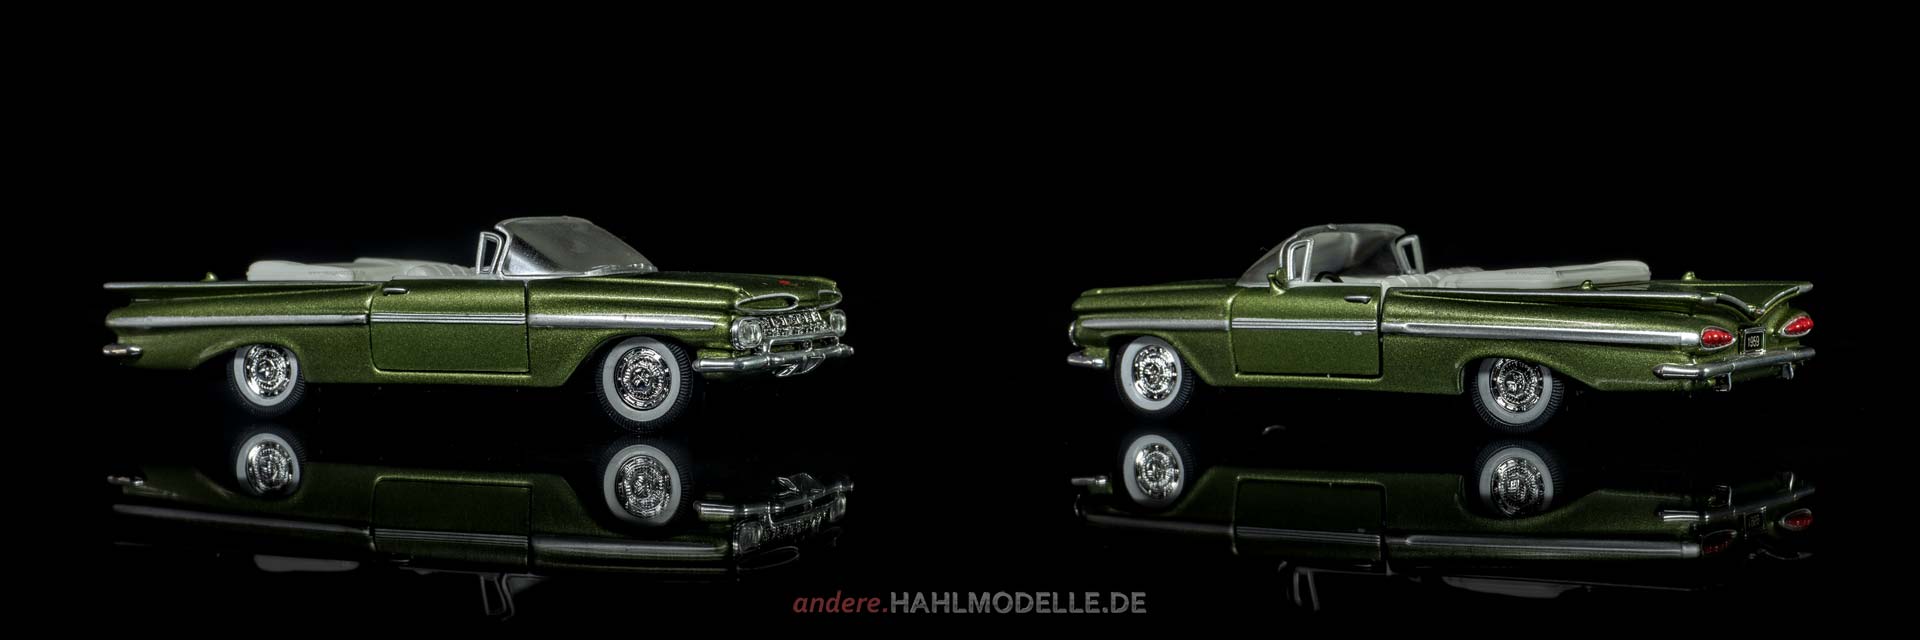 Chevrolet Impala Convertible | Cabriolet | Road Champs | 1:43 | www.andere.hahlmodelle.de